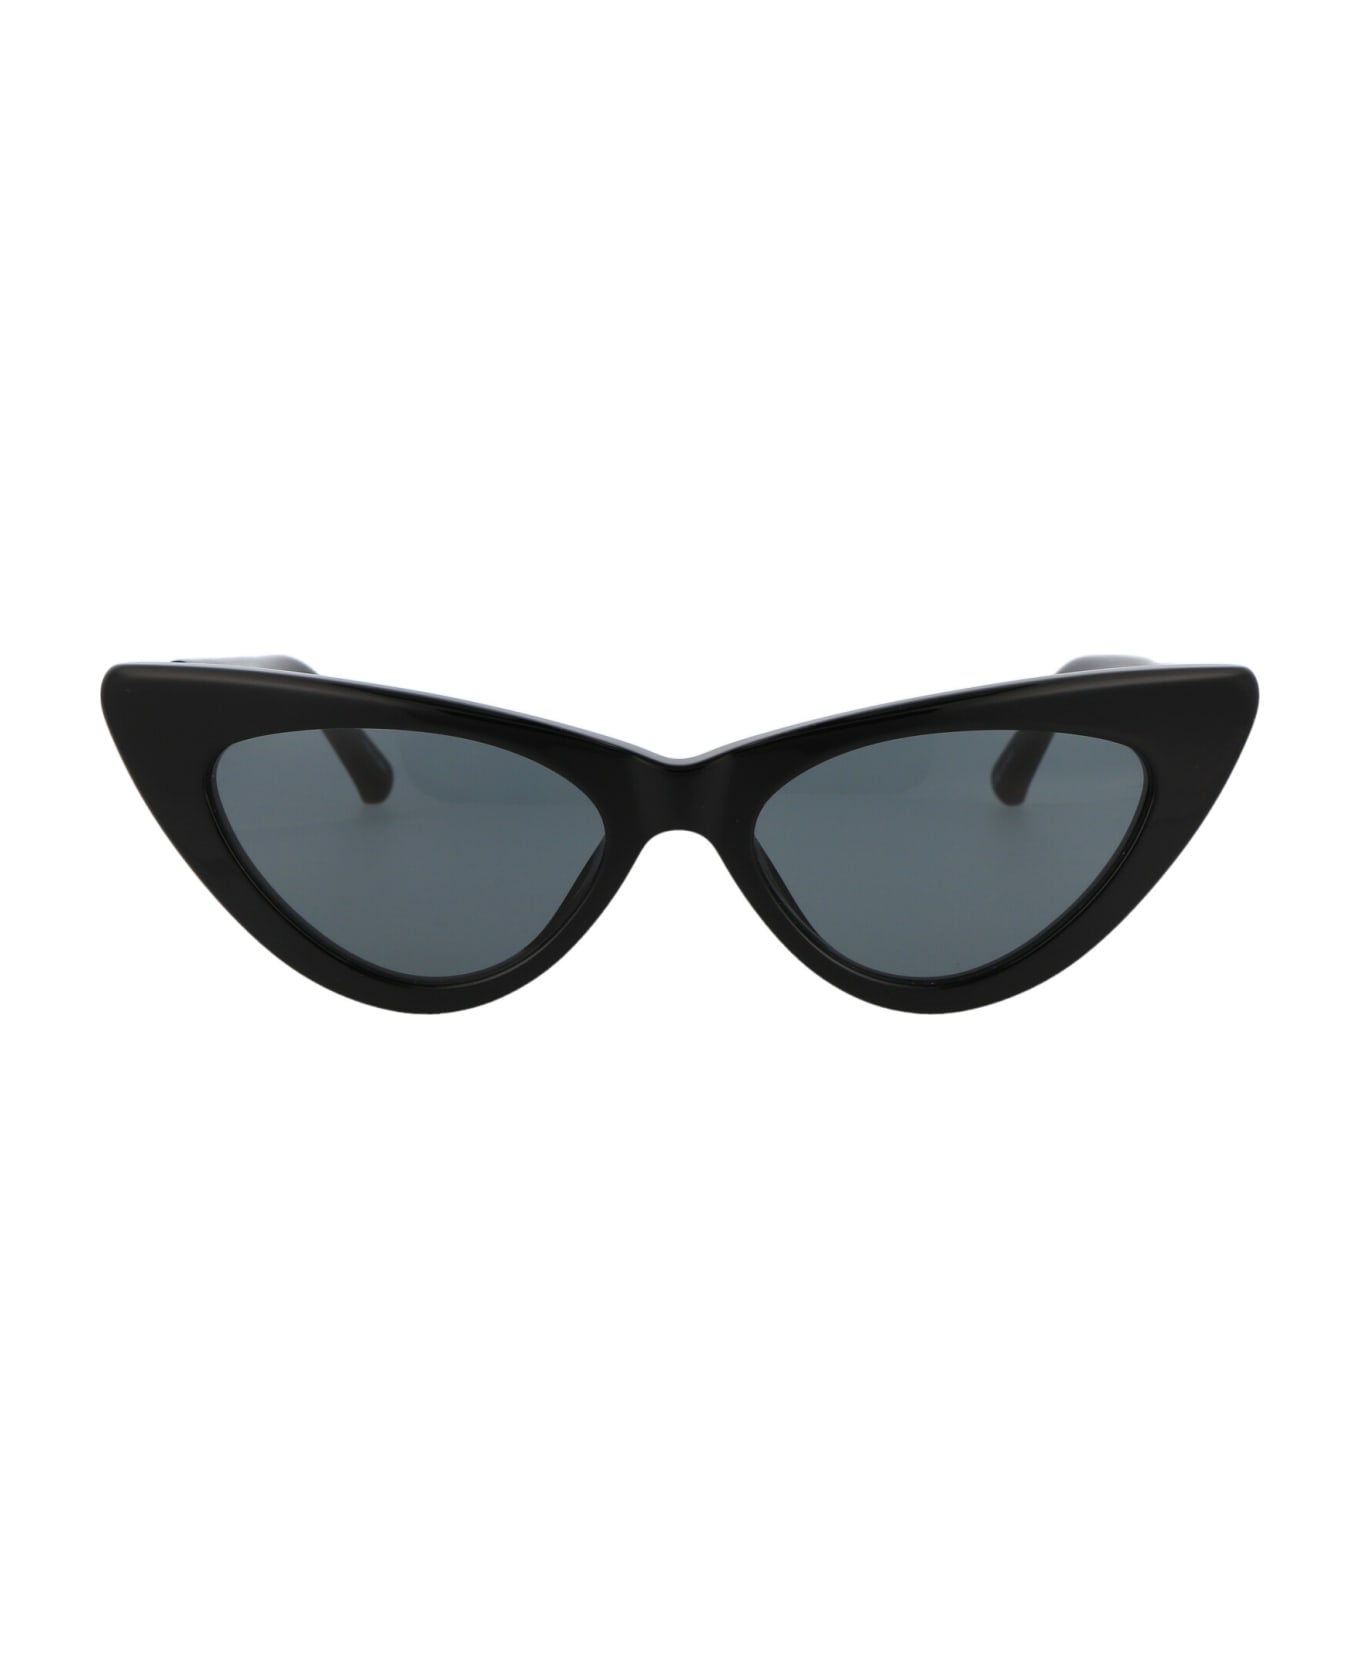 The Attico Dora Sunglasses - BLACK/YELLOWGOLD/GREY サングラス